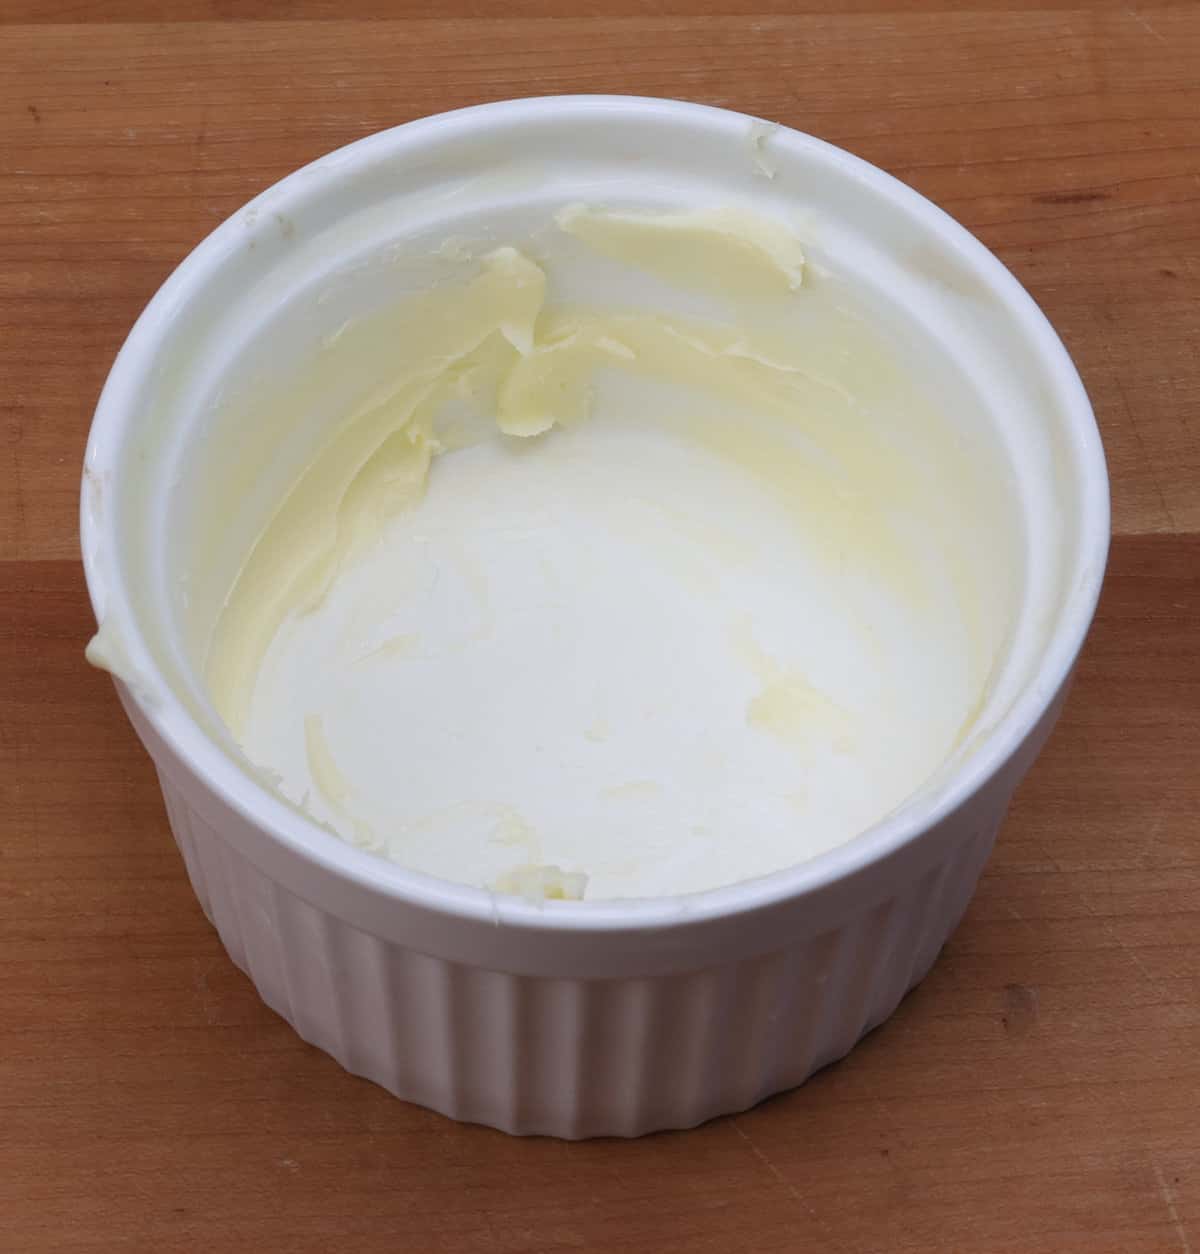 a generously buttered ramekin on a kitchen counter.